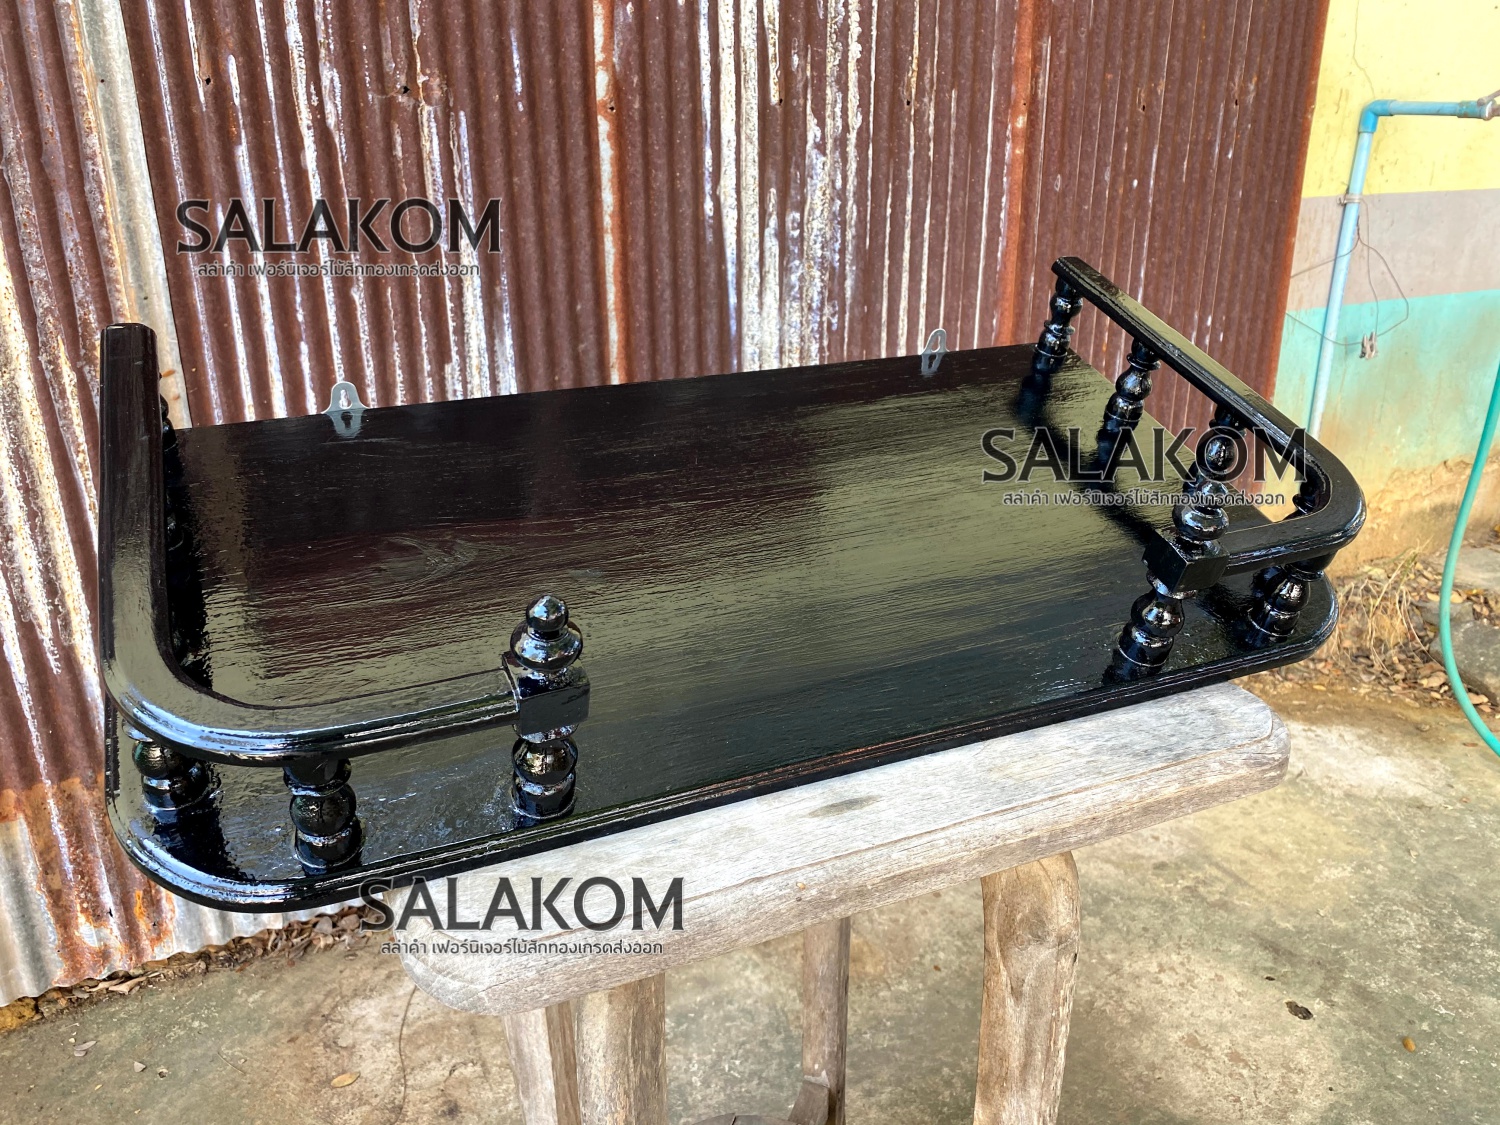 Salakom หิ้งวางพระ ติดผนัง ไม้สักแท้ ขนาด 60*36 เซนต์. สีดำ หิ้งพระไม้สักแขวนผนัง Buddha's shelf